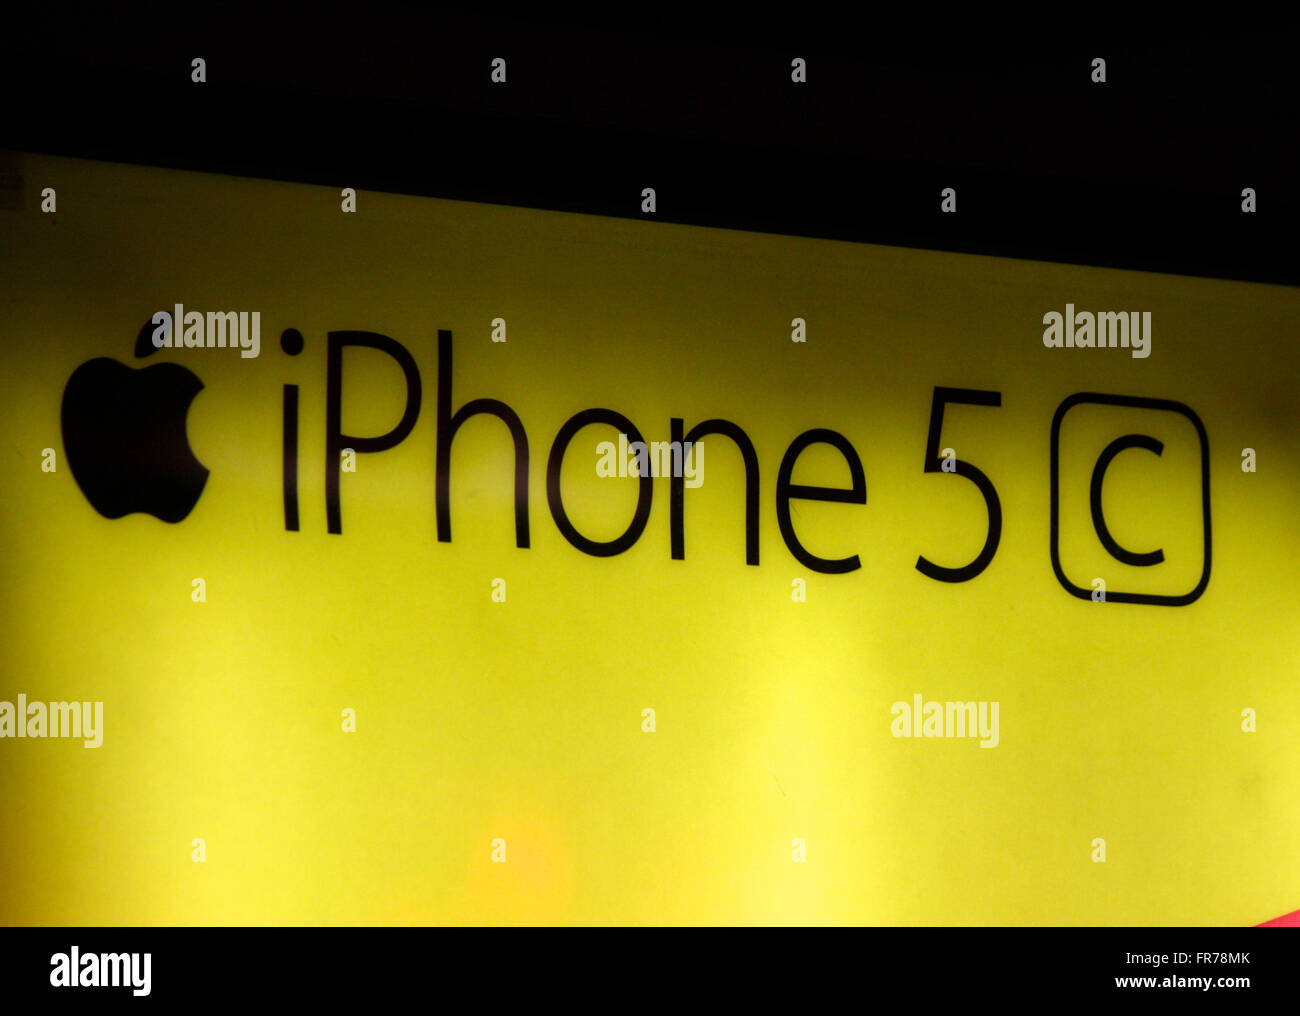 Markenname: "Apple Iphone 5c', Berlino. Foto Stock